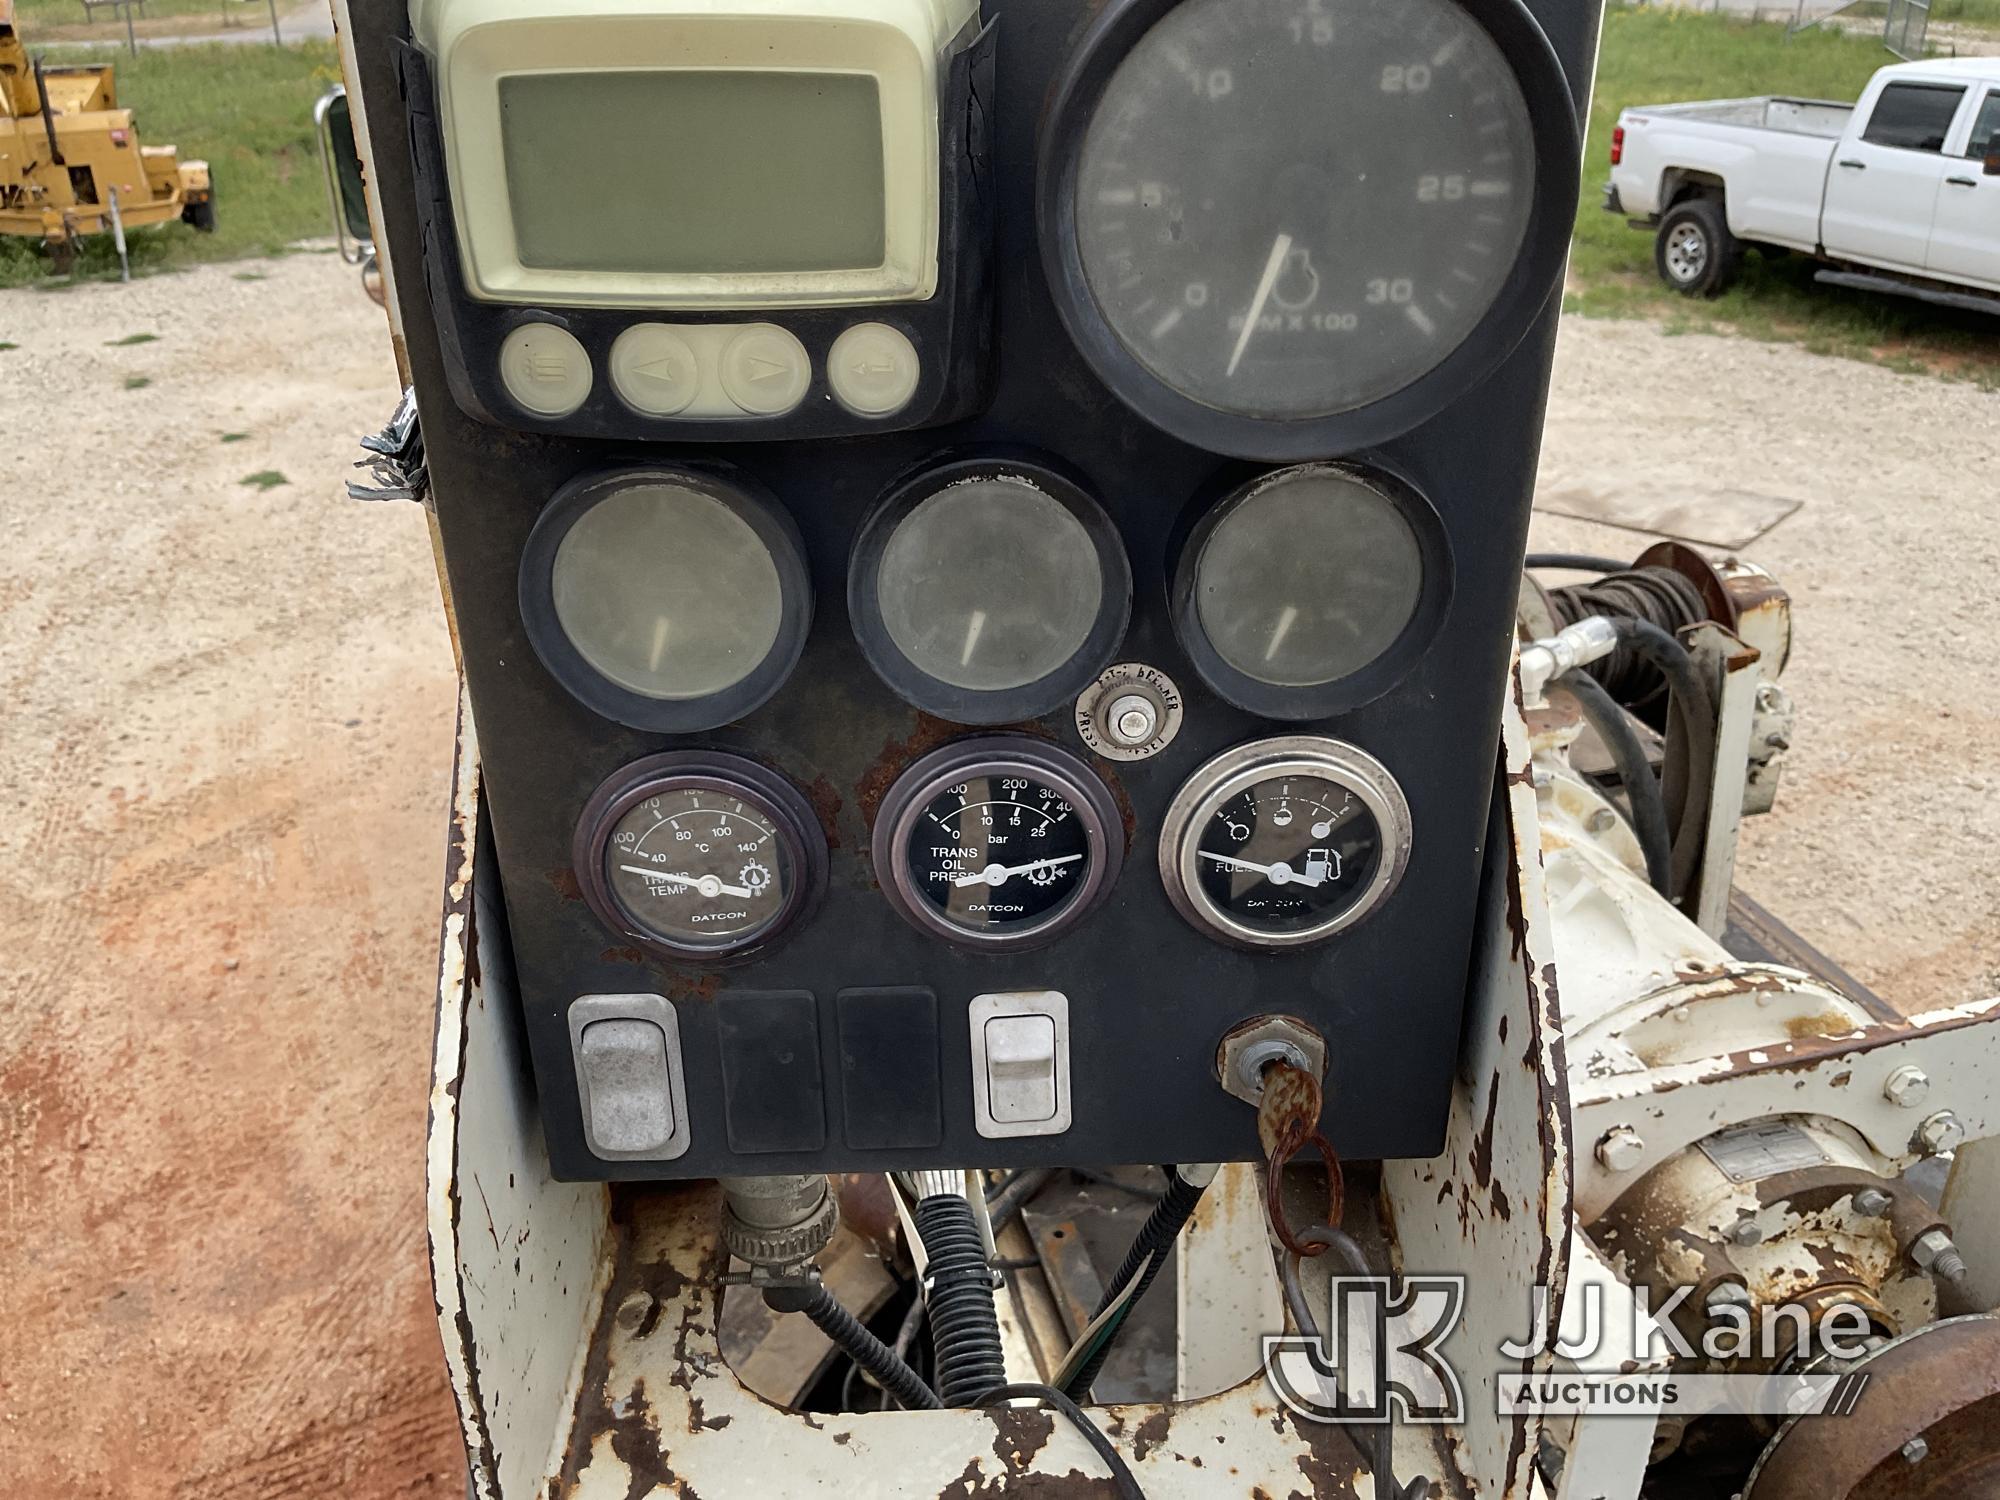 (Fredericksburg, TX) Terex Reedrill 330-12FT, Pressure Digger mounted on 2006 Sterling LT8500 T/A Ca